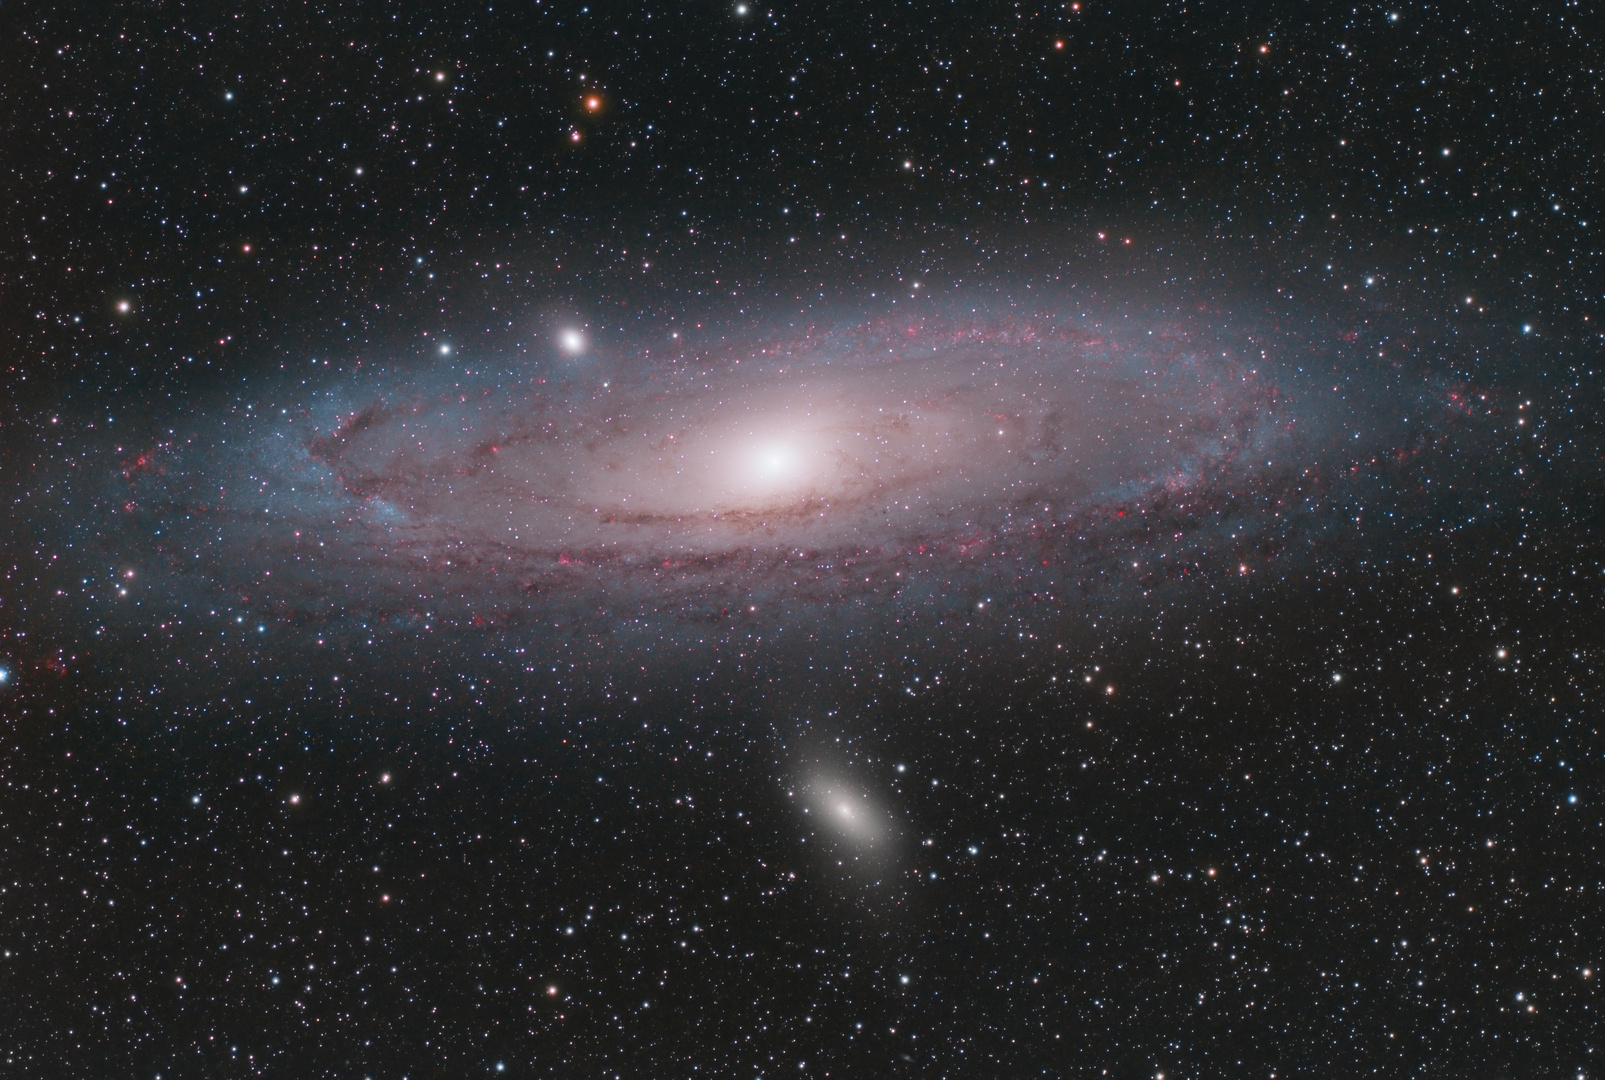 M31 - Andromedagalaxie, unser galaktischer Nachbar